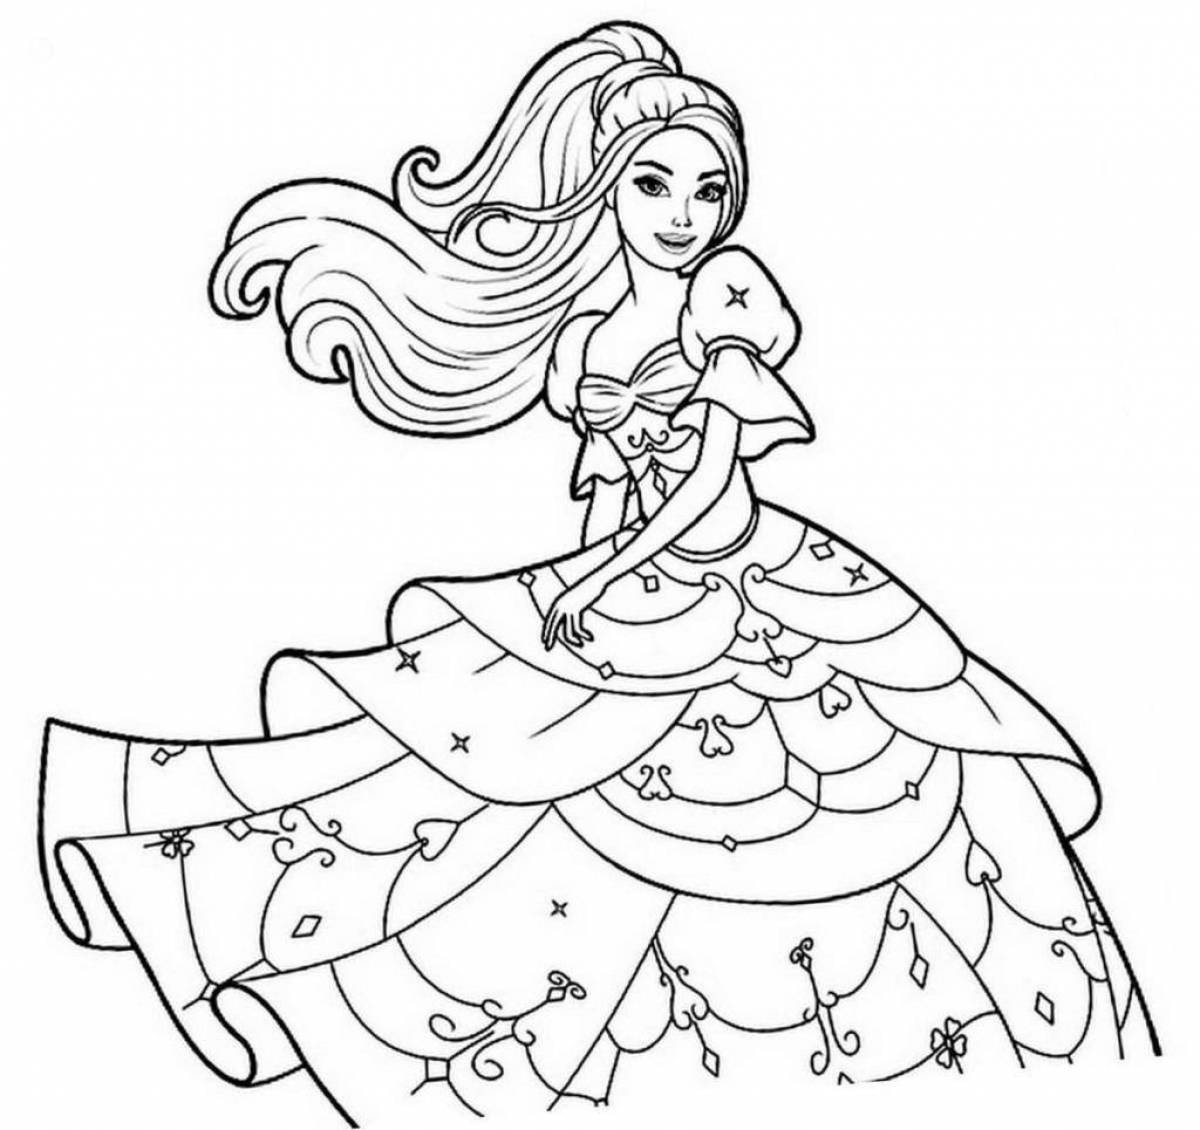 Exquisite barbie princess coloring book